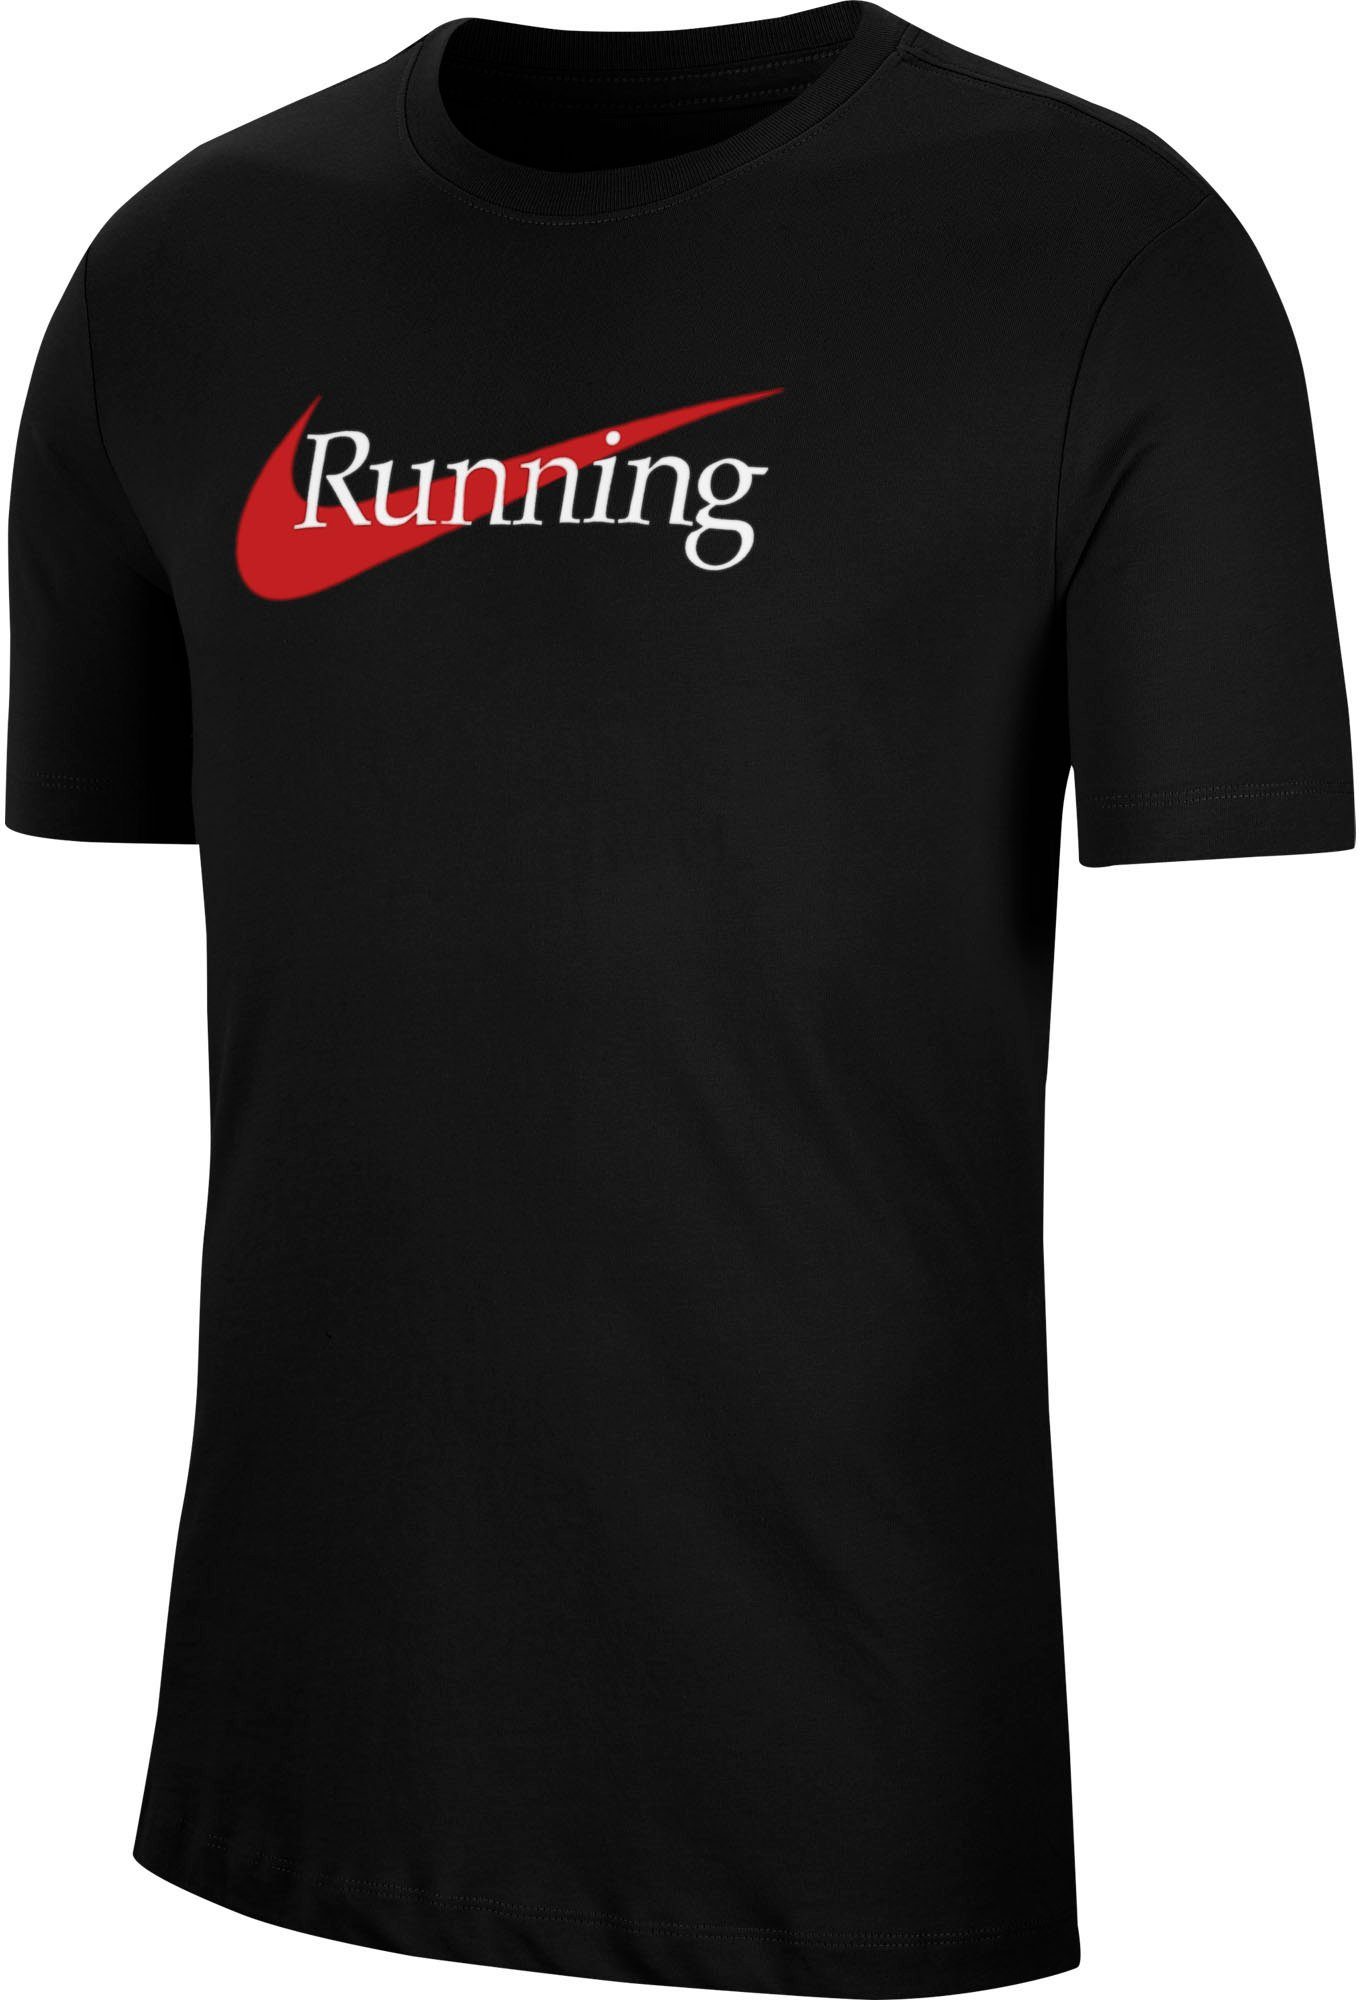 Men's Dri-FIT Laufshirt Nike schwarz Running T-Shirt